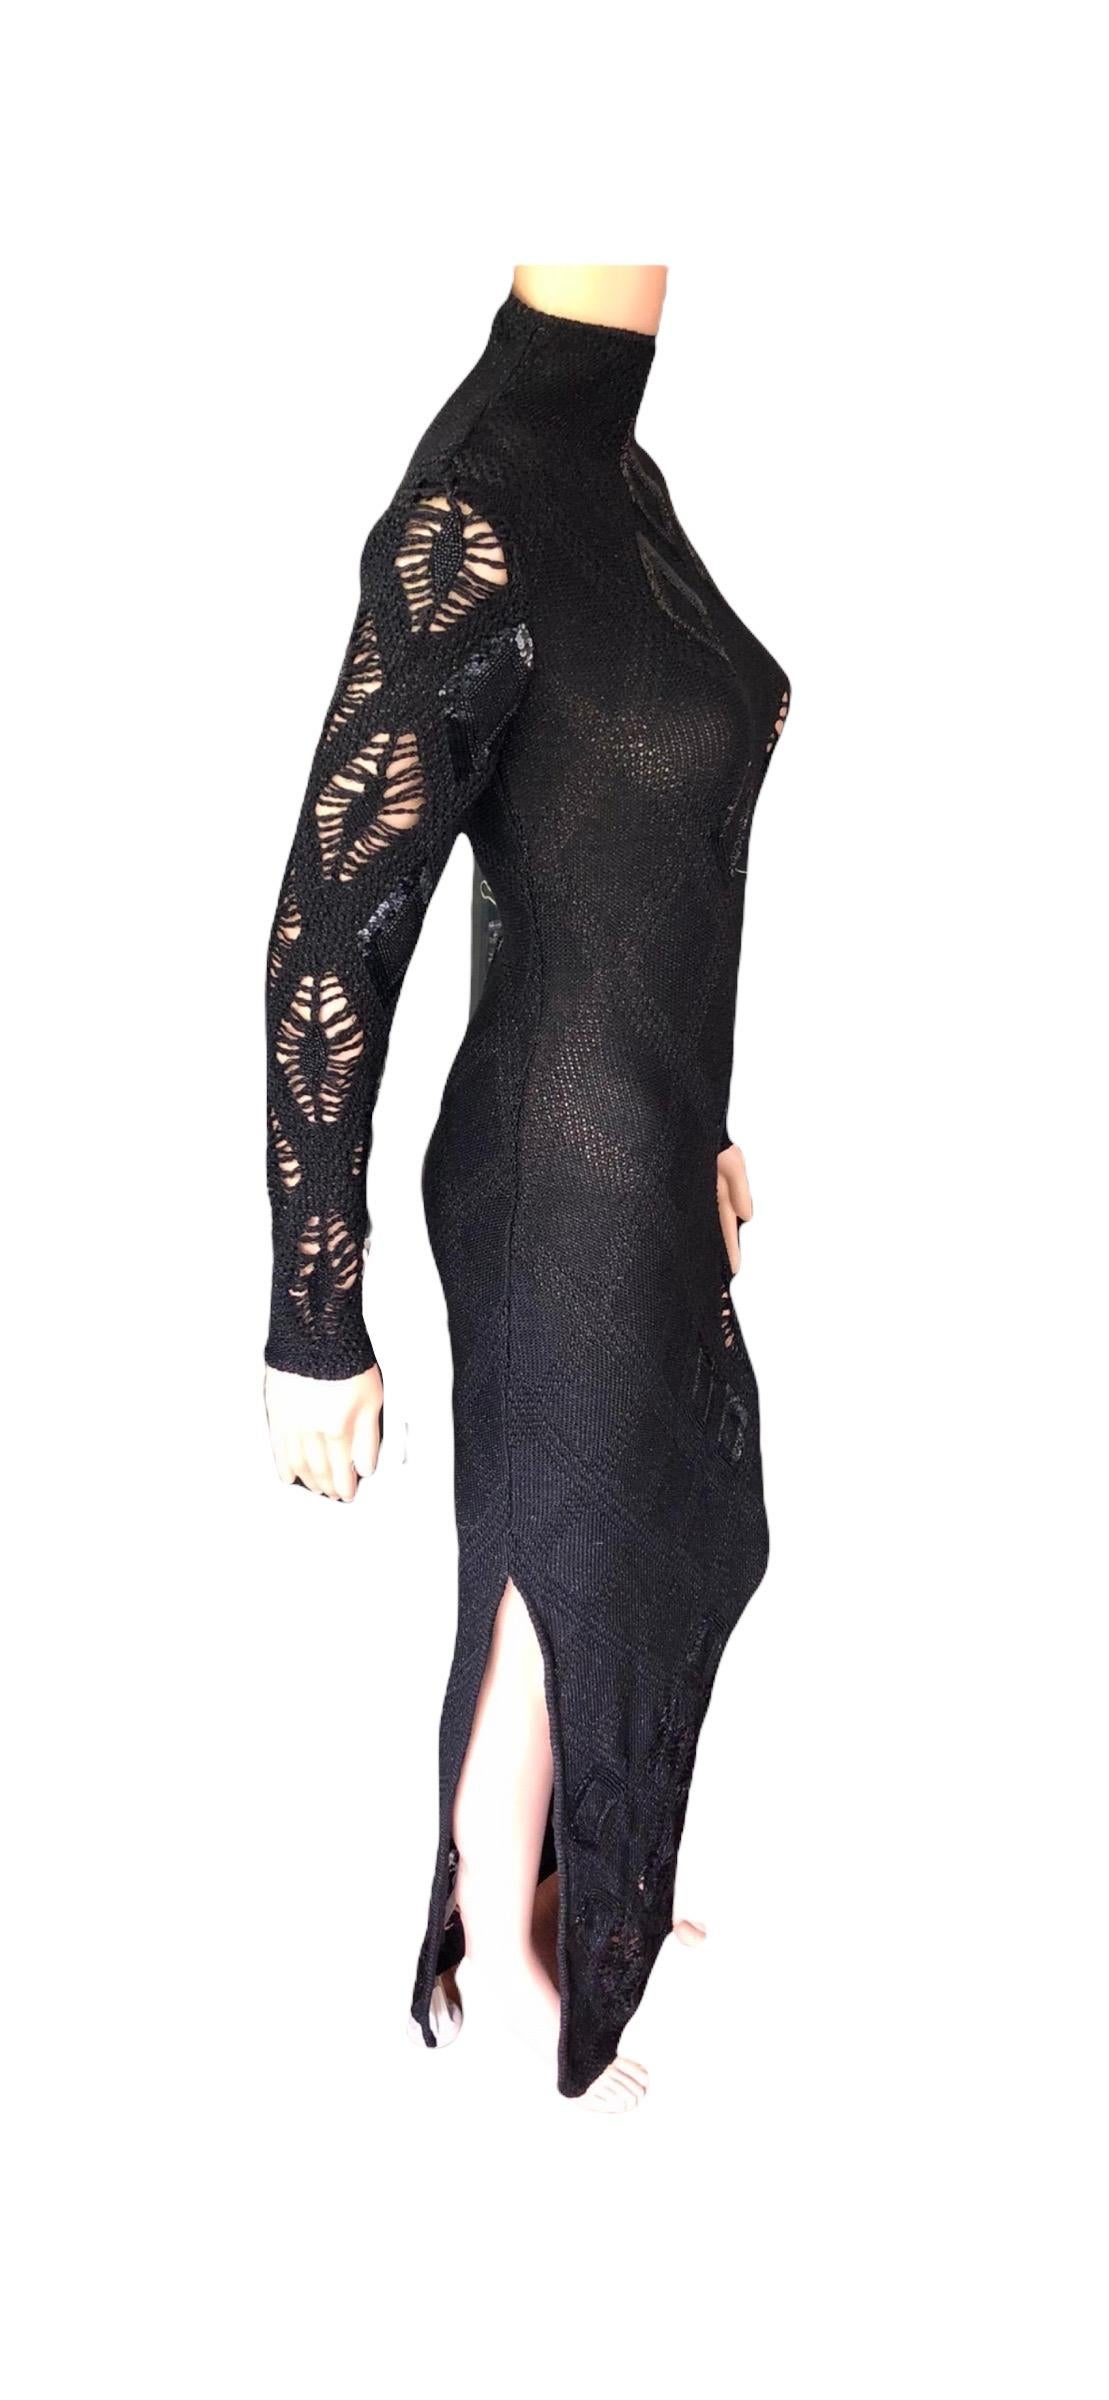 Gianfranco Ferre S/S 2002 Beaded Sequin Sheer Crochet Knit Black Maxi Dress Gown For Sale 10